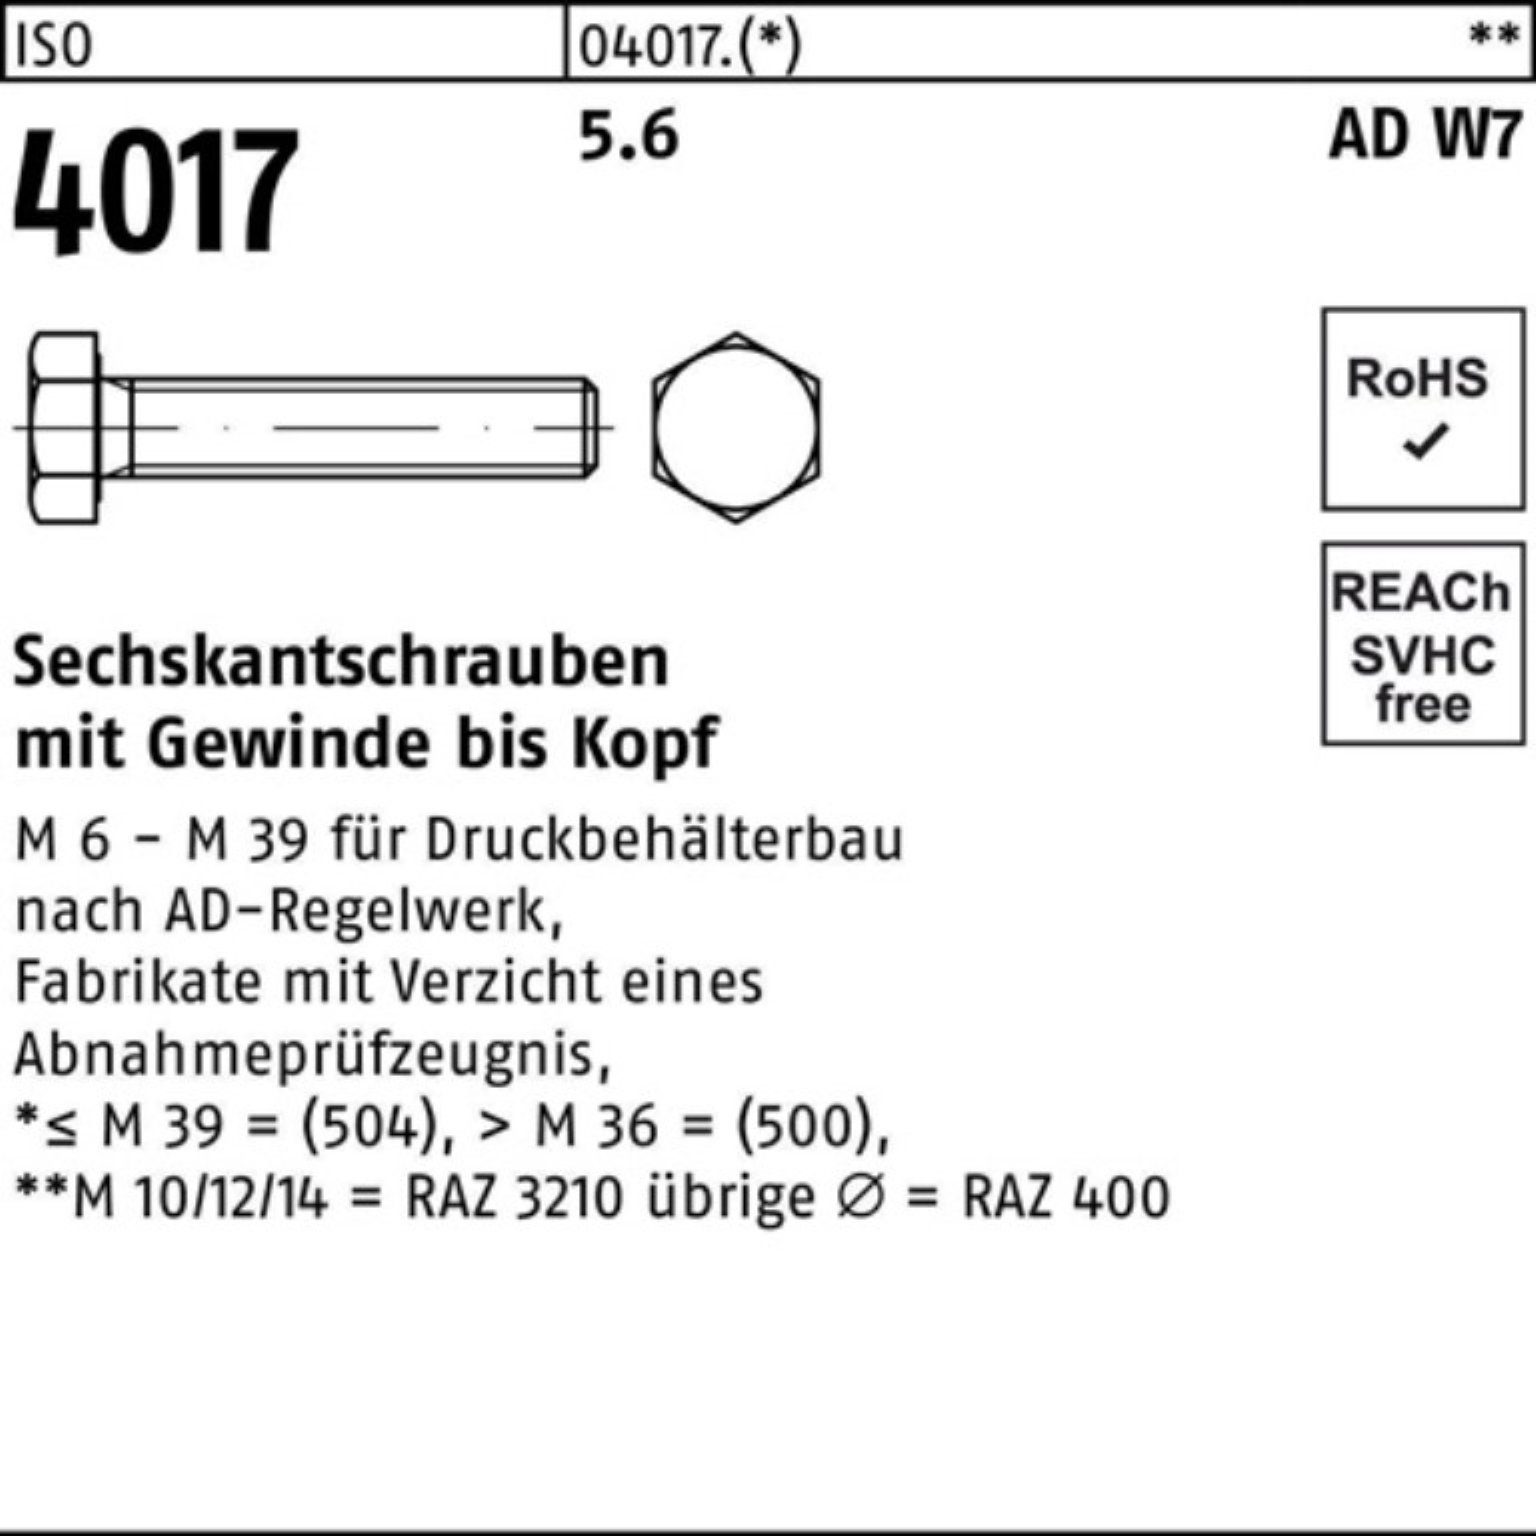 Bufab Sechskantschraube 100er Pack Sechskantschraube ISO 4017 VG M12x 40 5.6 AD W7 100 Stück